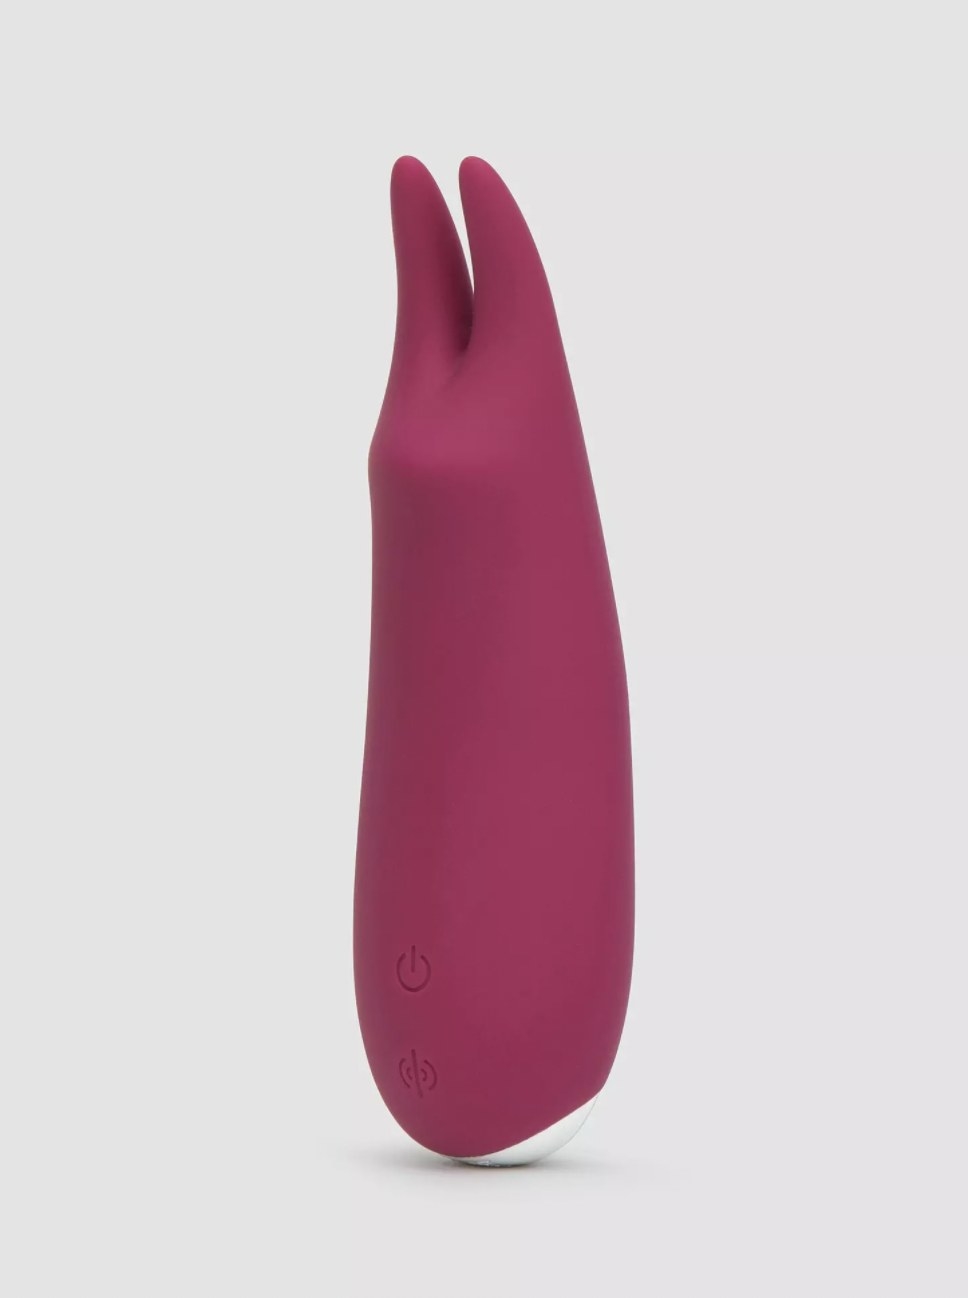 The pink rabbit ears vibrator